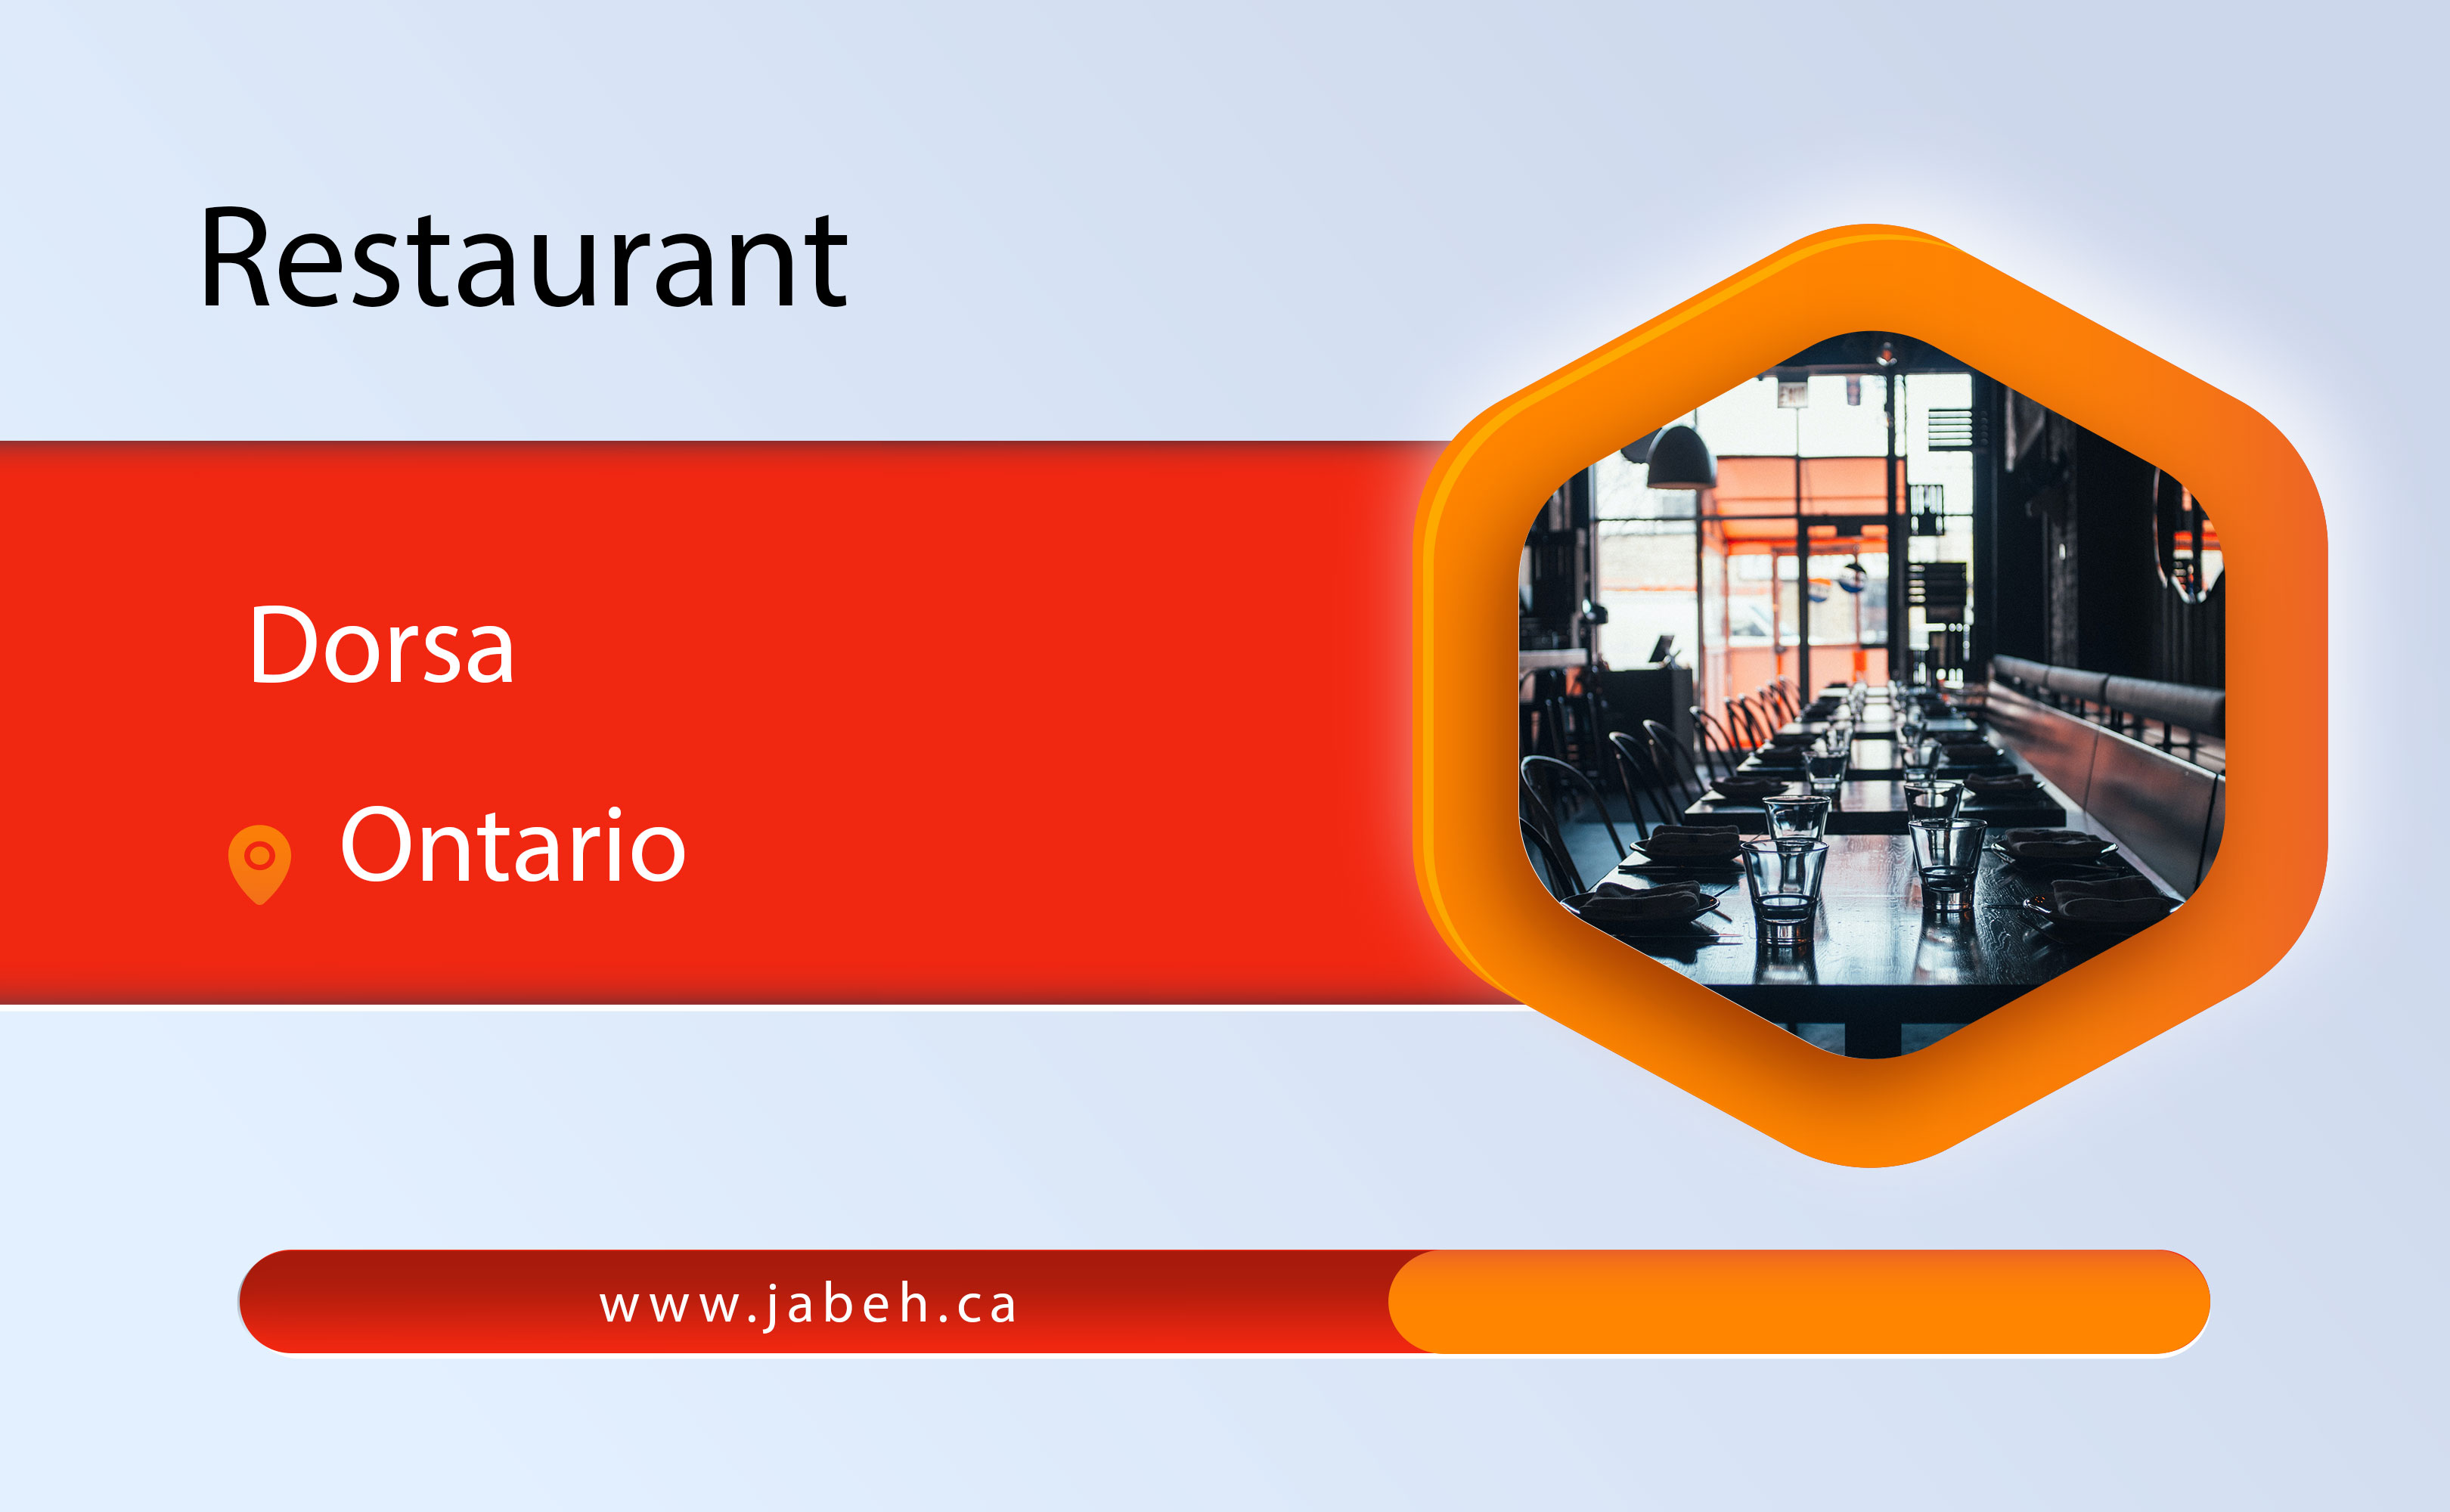 Dorsa restaurant in Ontario